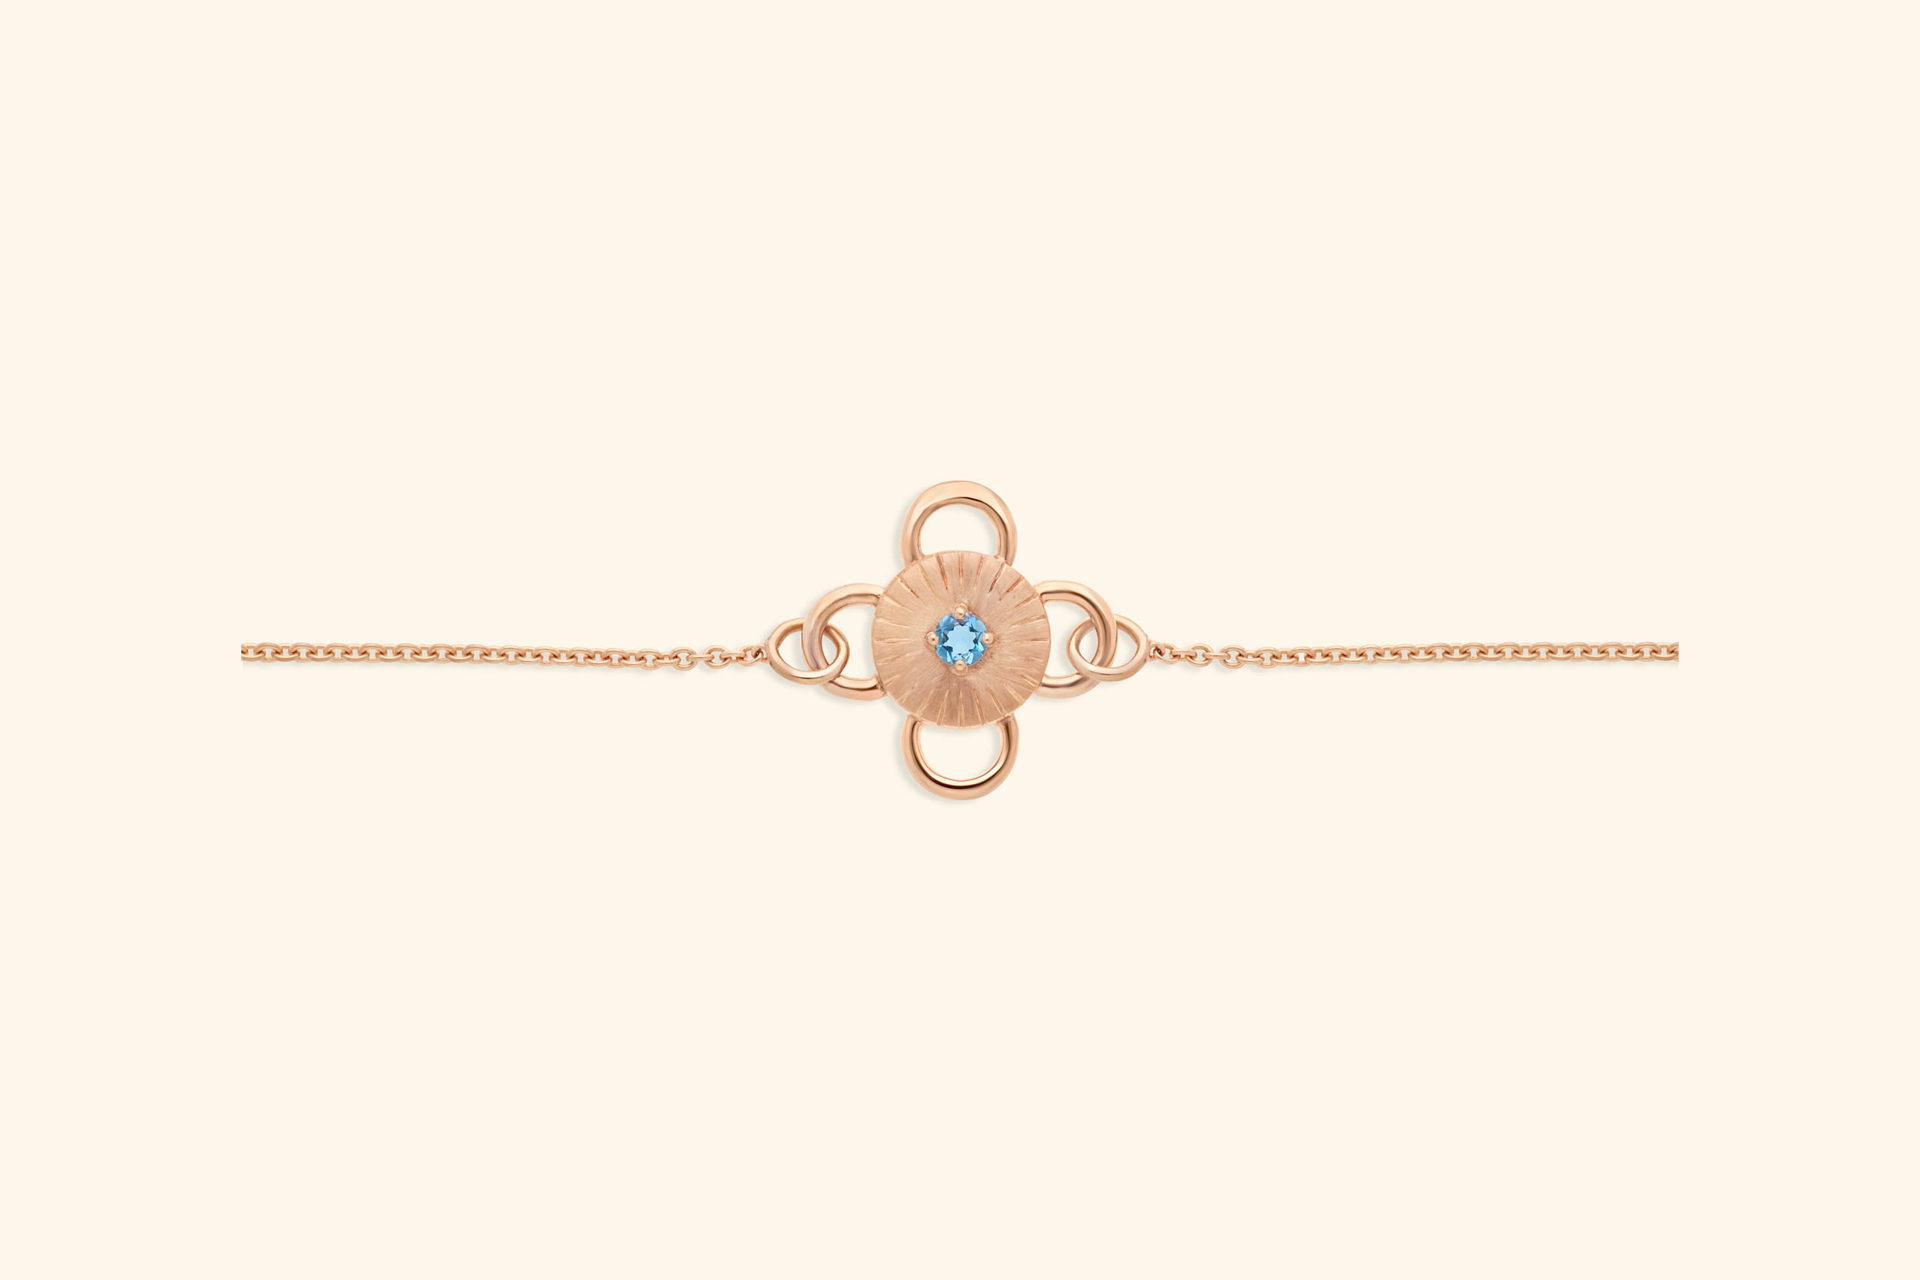 Baby Bolt bracelet, rose gold jewelry, set with a round aquamarine